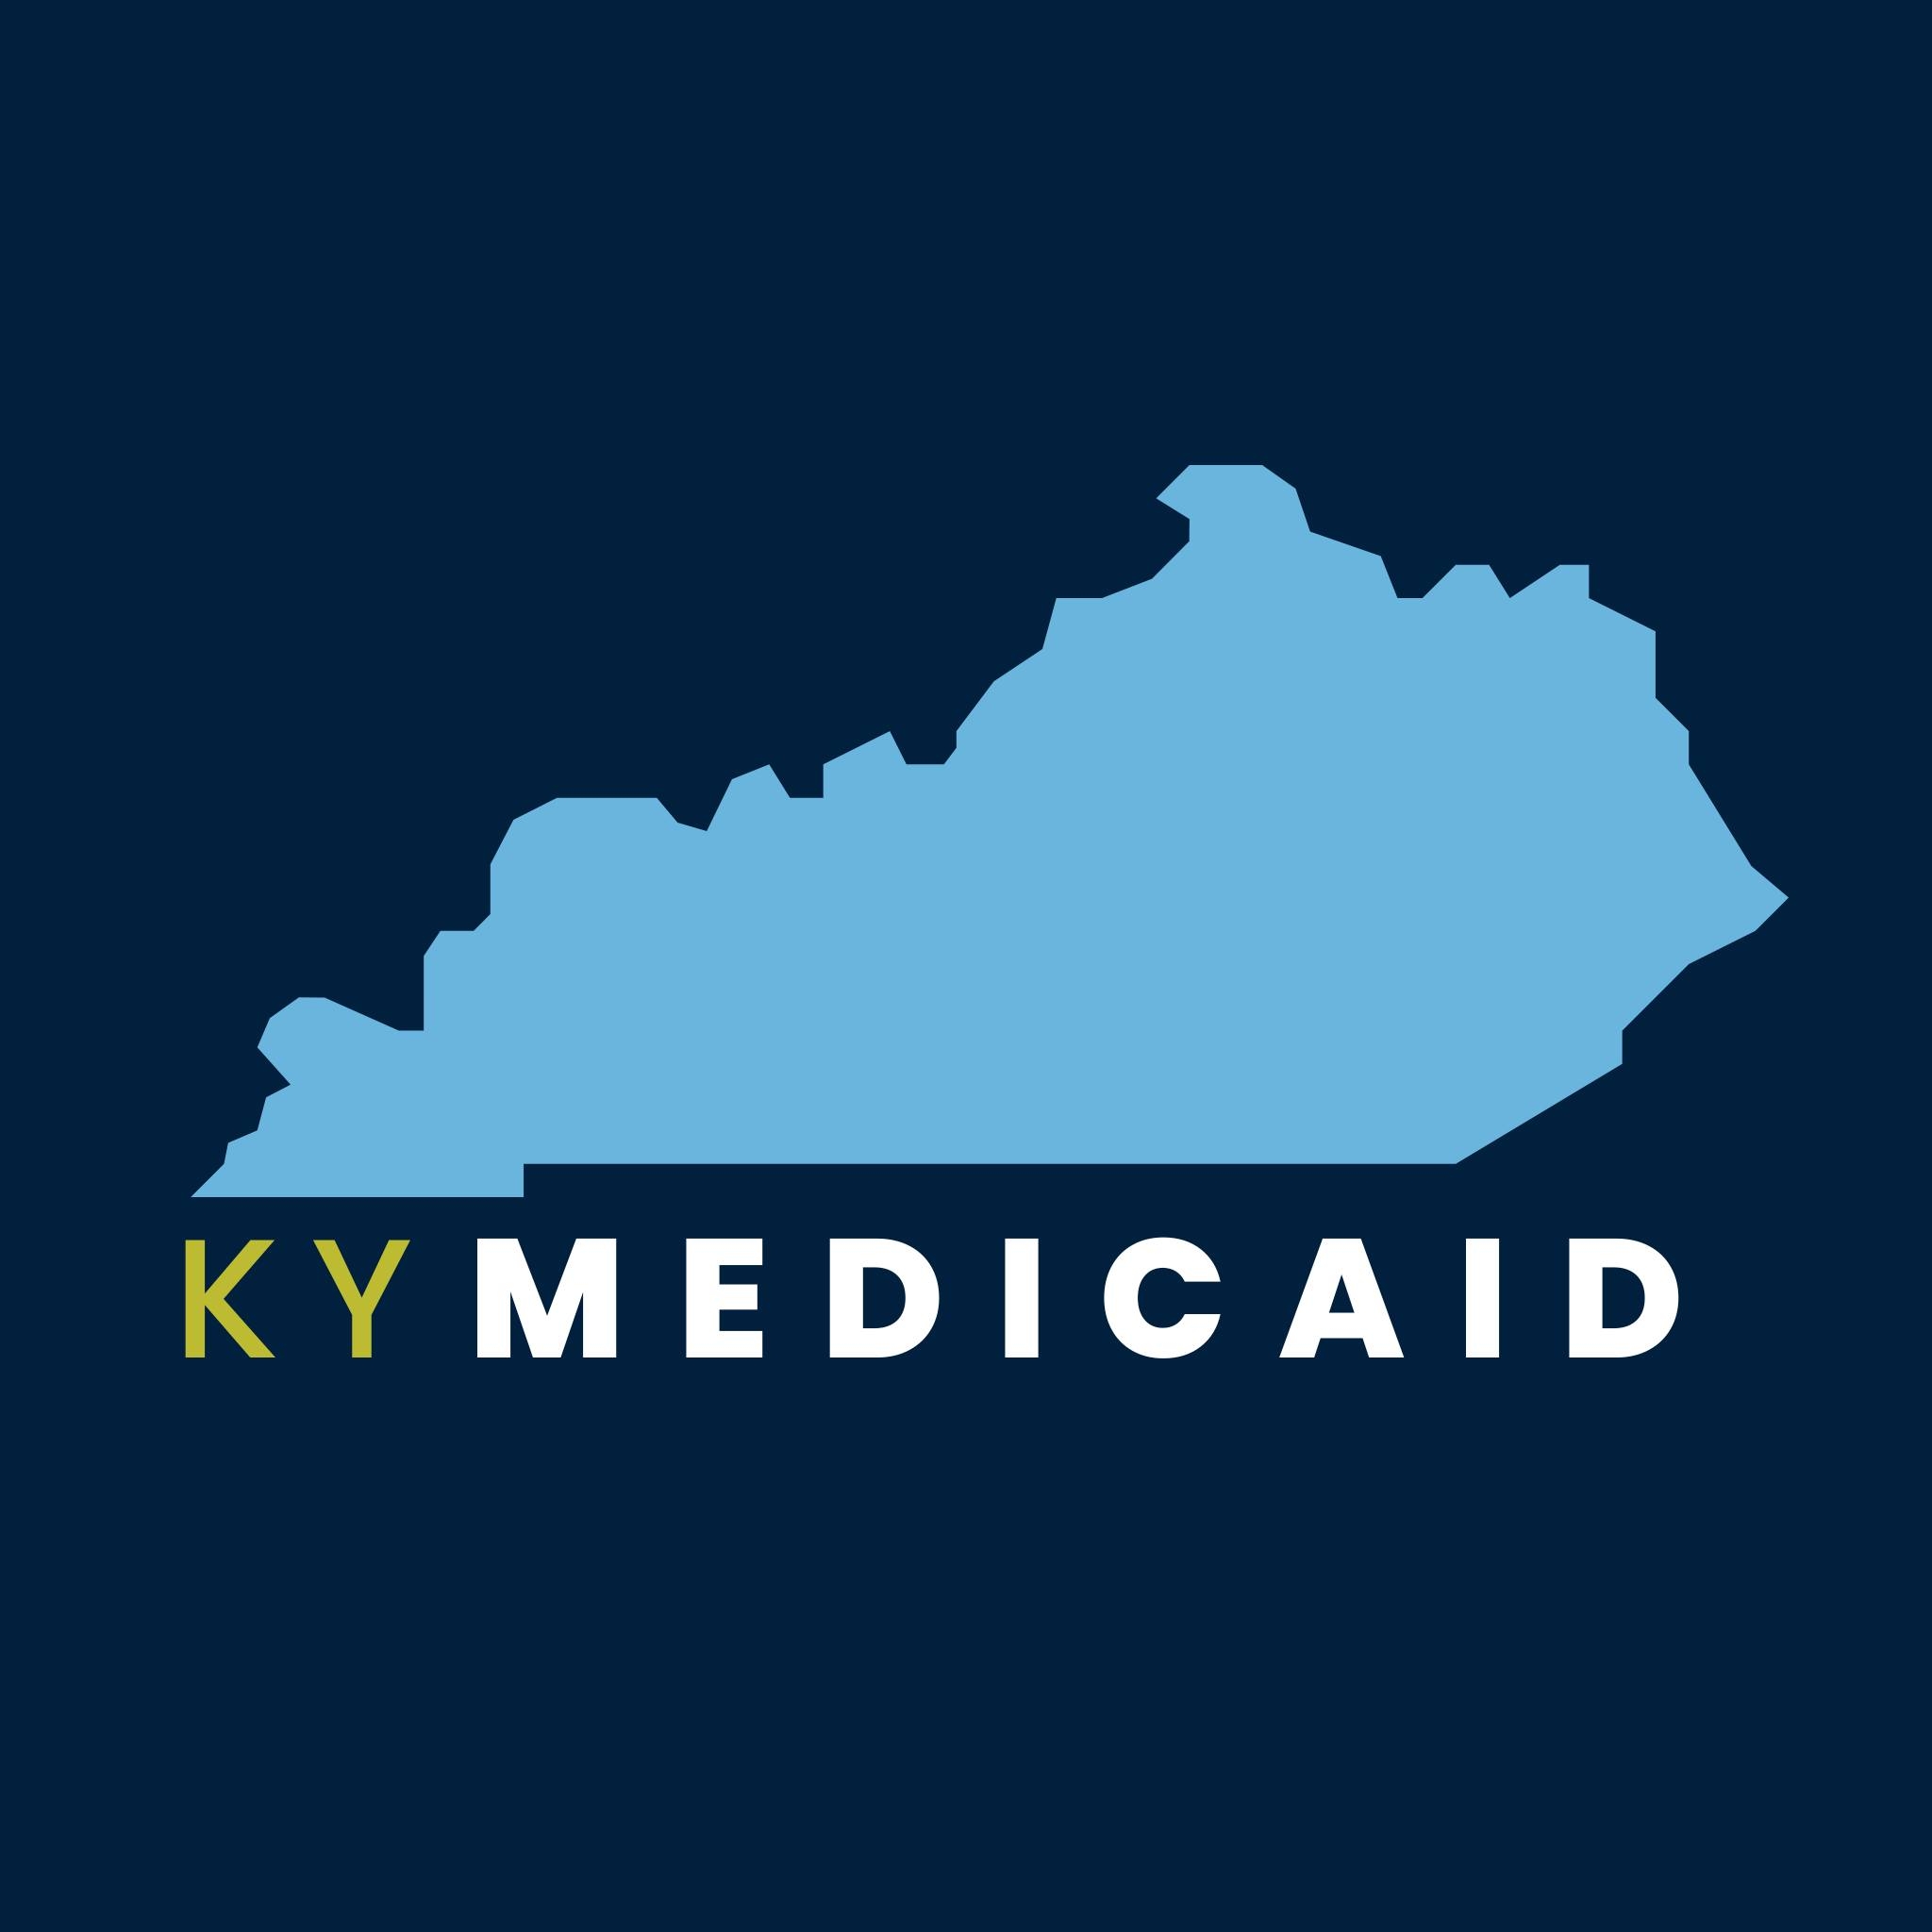 Federal Medicaid renewal coming soon